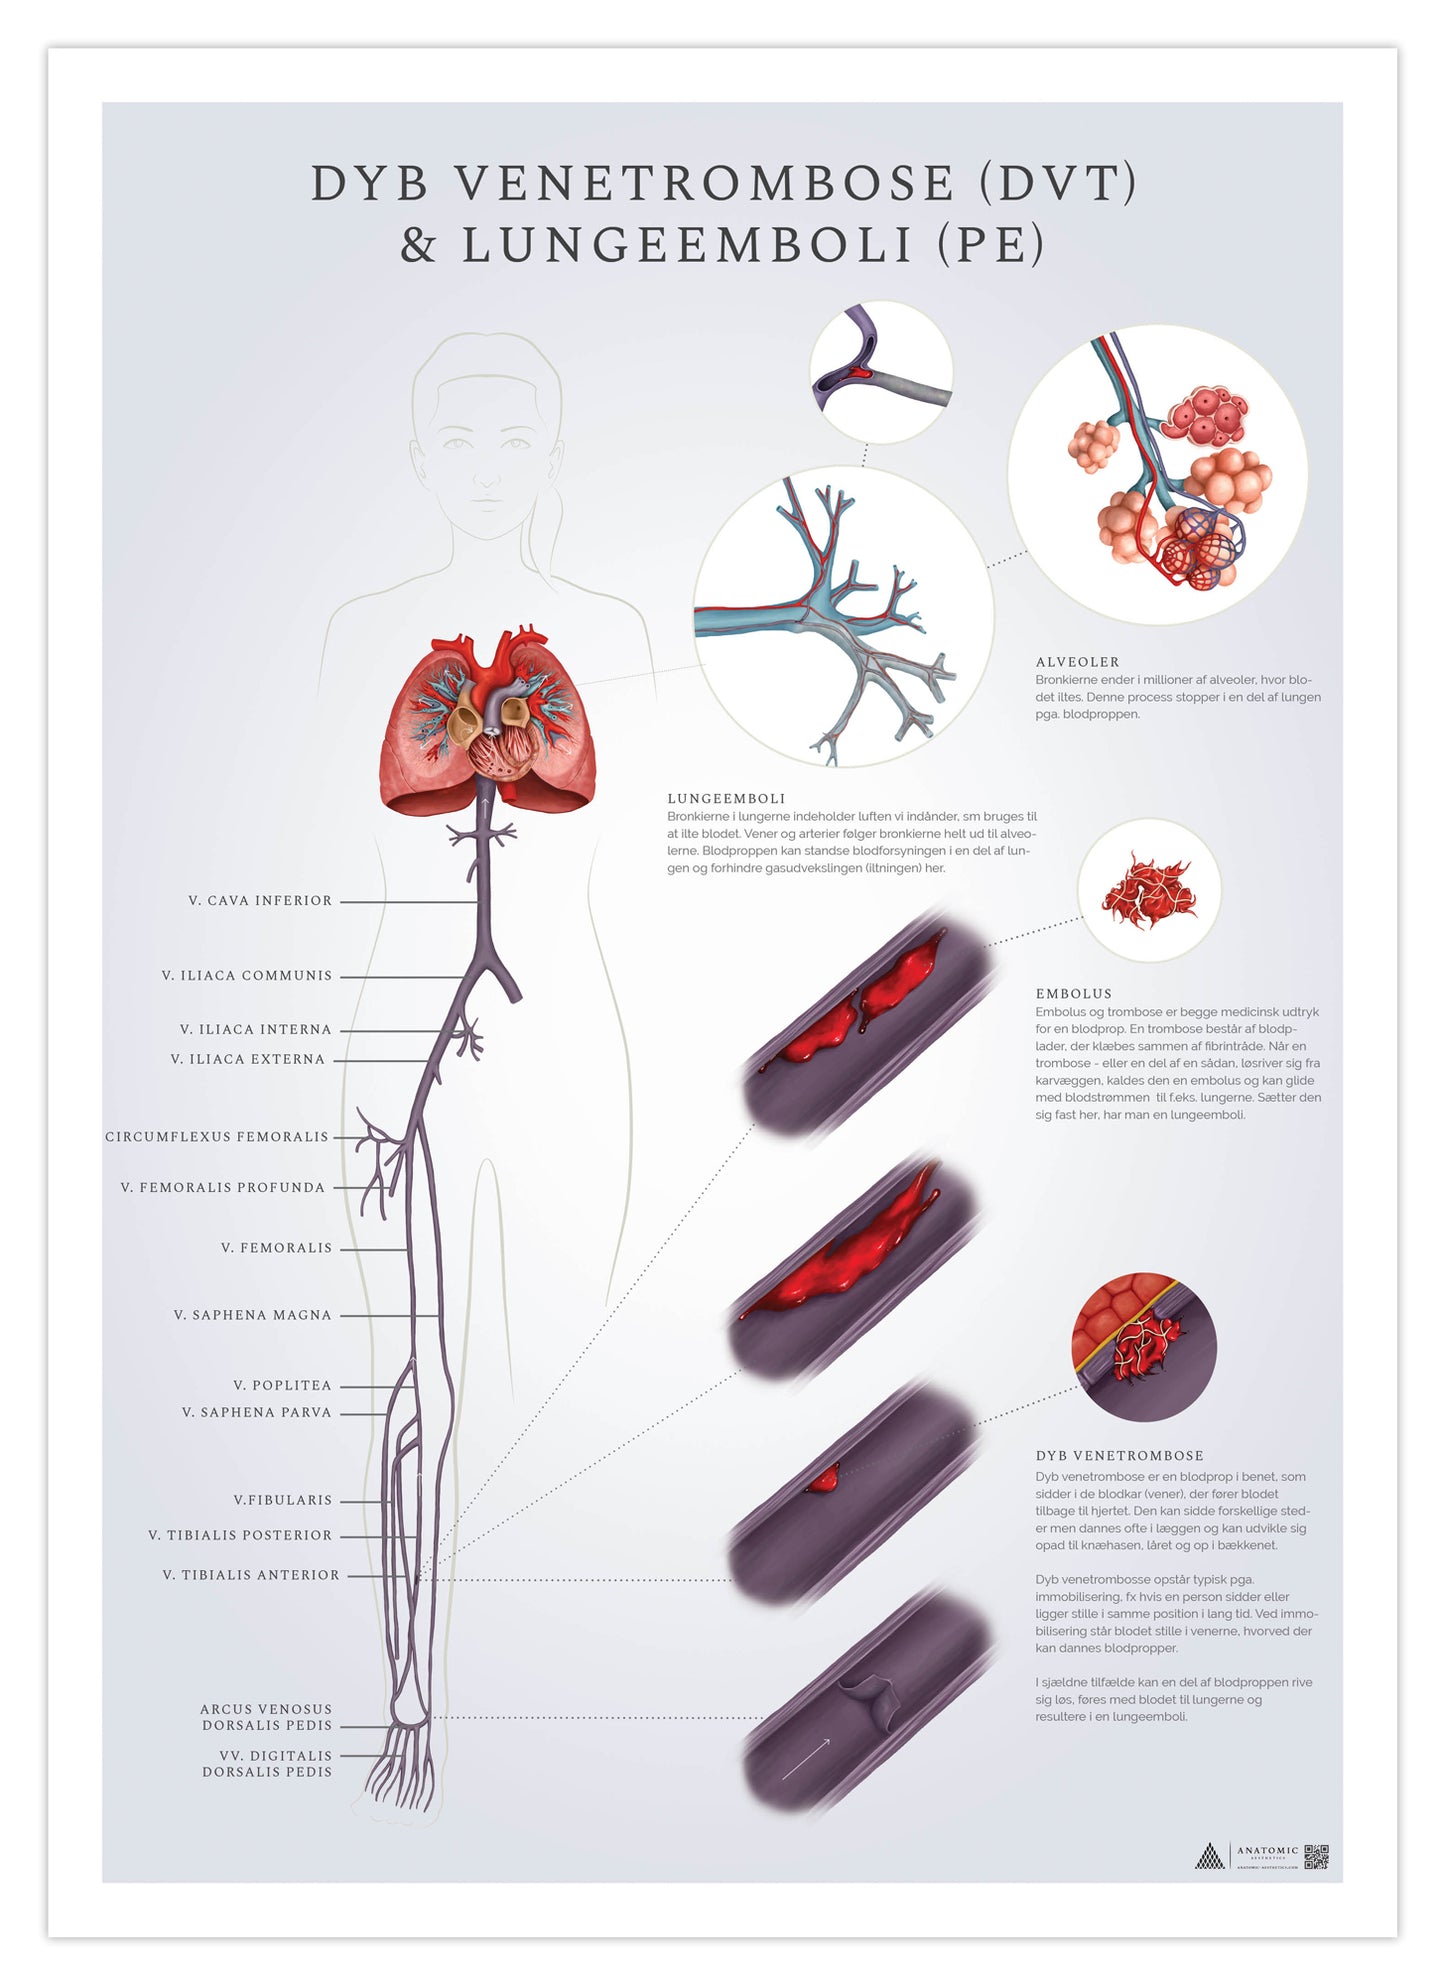 Poster on deep vein thrombosis and pulmonary embolism (DVT and PE) 